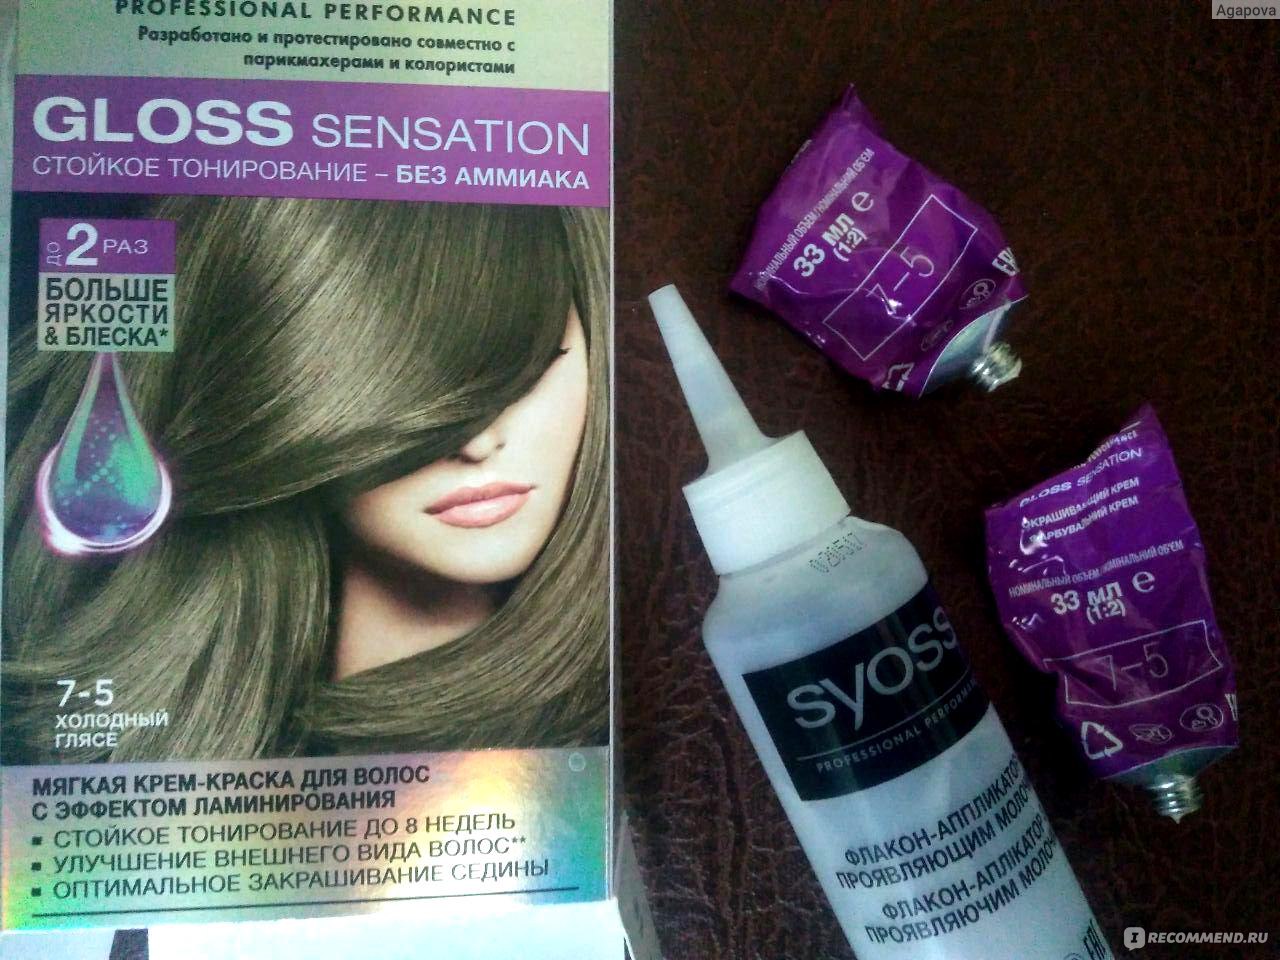 Syoss Gloss Sensation 7-5 Холодное глясе